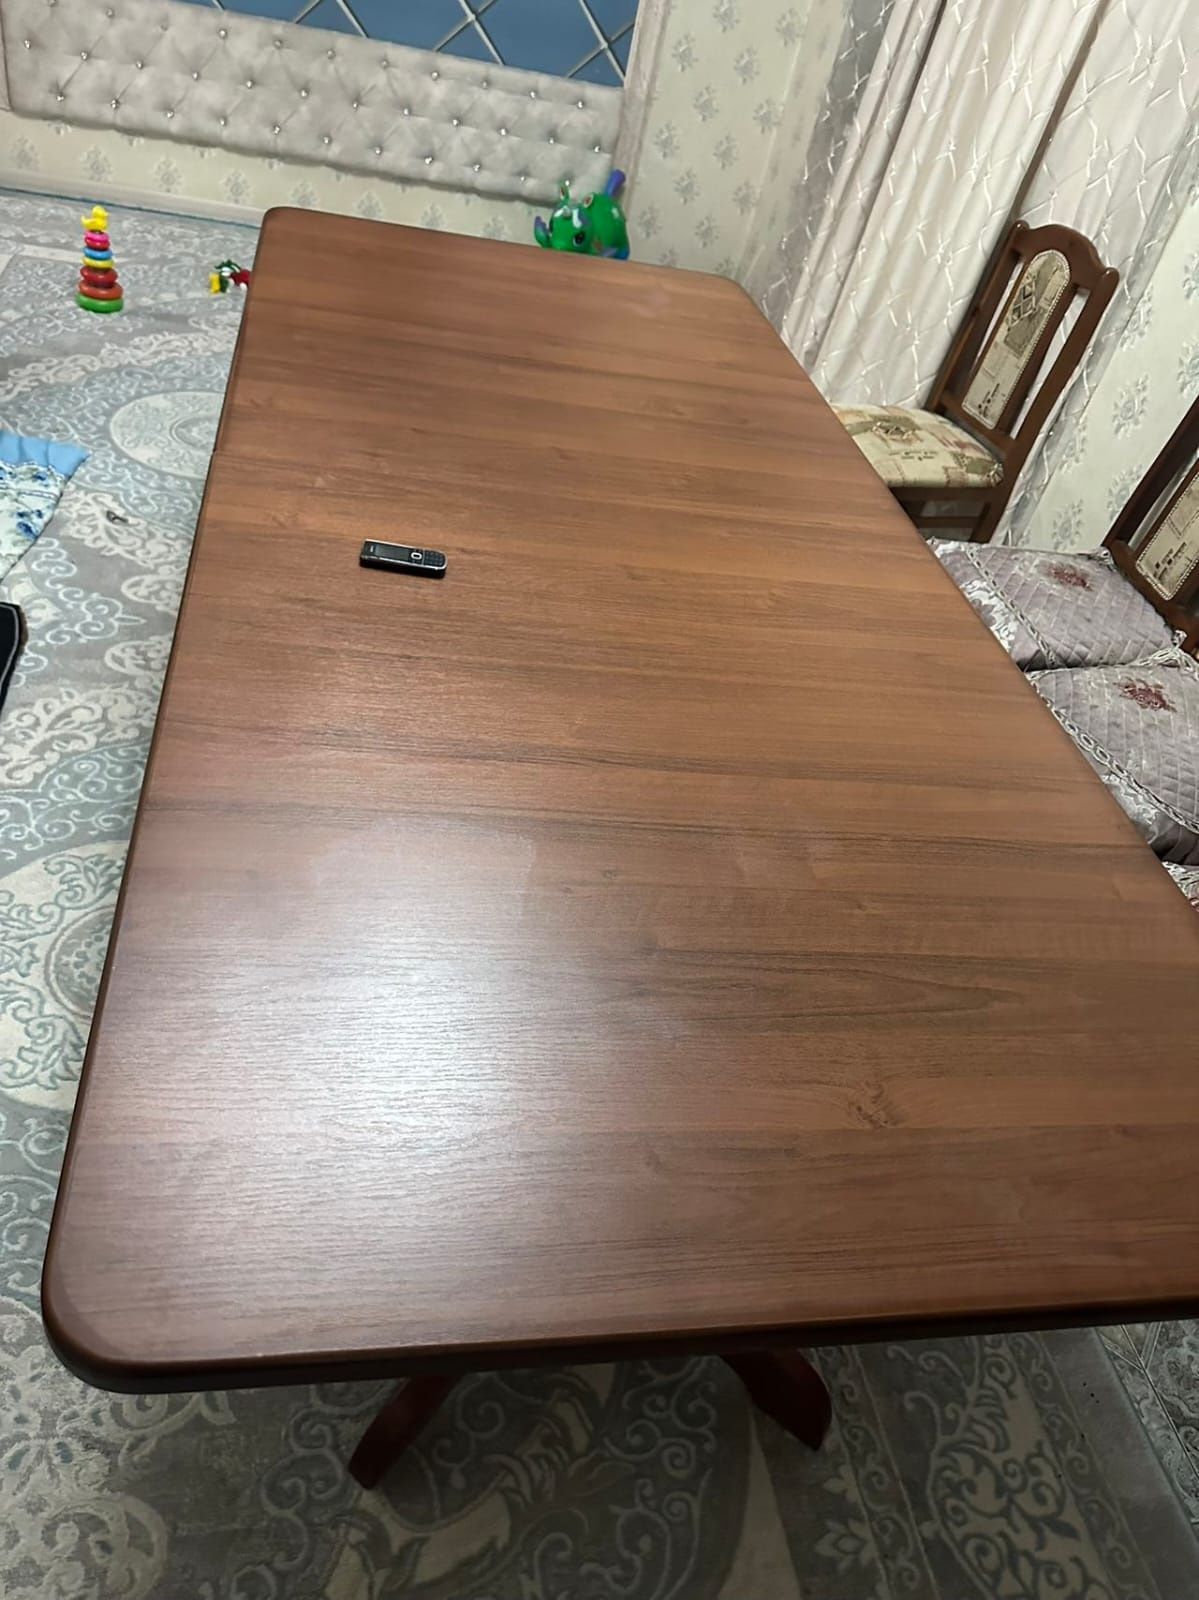 Новый стол 4 метровая, качественная,
 без царапины